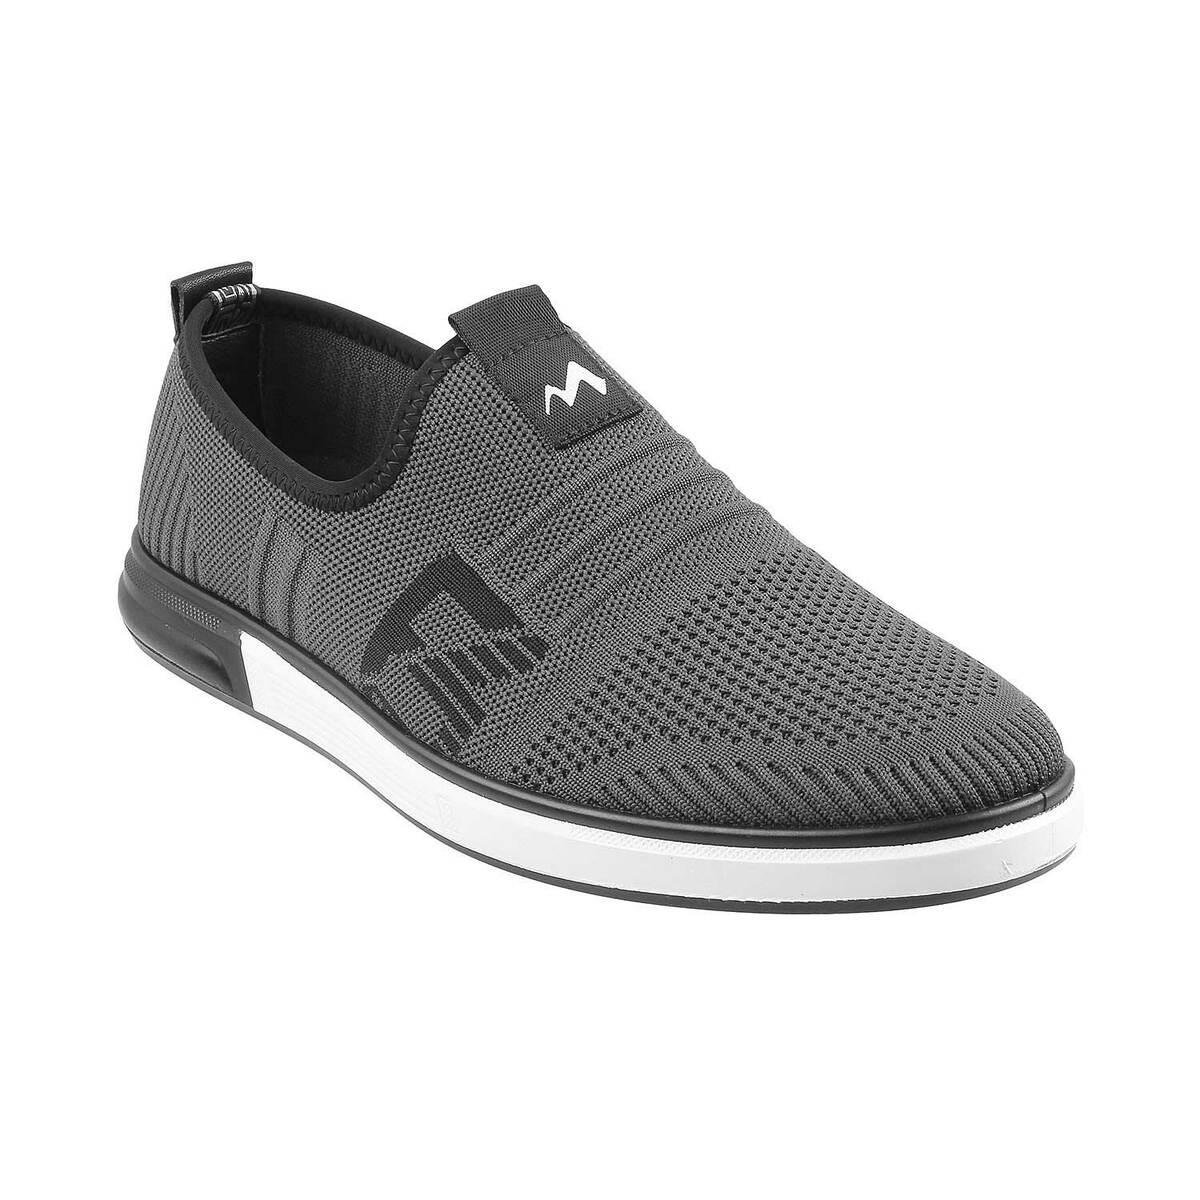 Buy Men Grey Casual Sneakers Online | SKU: 71-8572-14-40-Metro Shoes